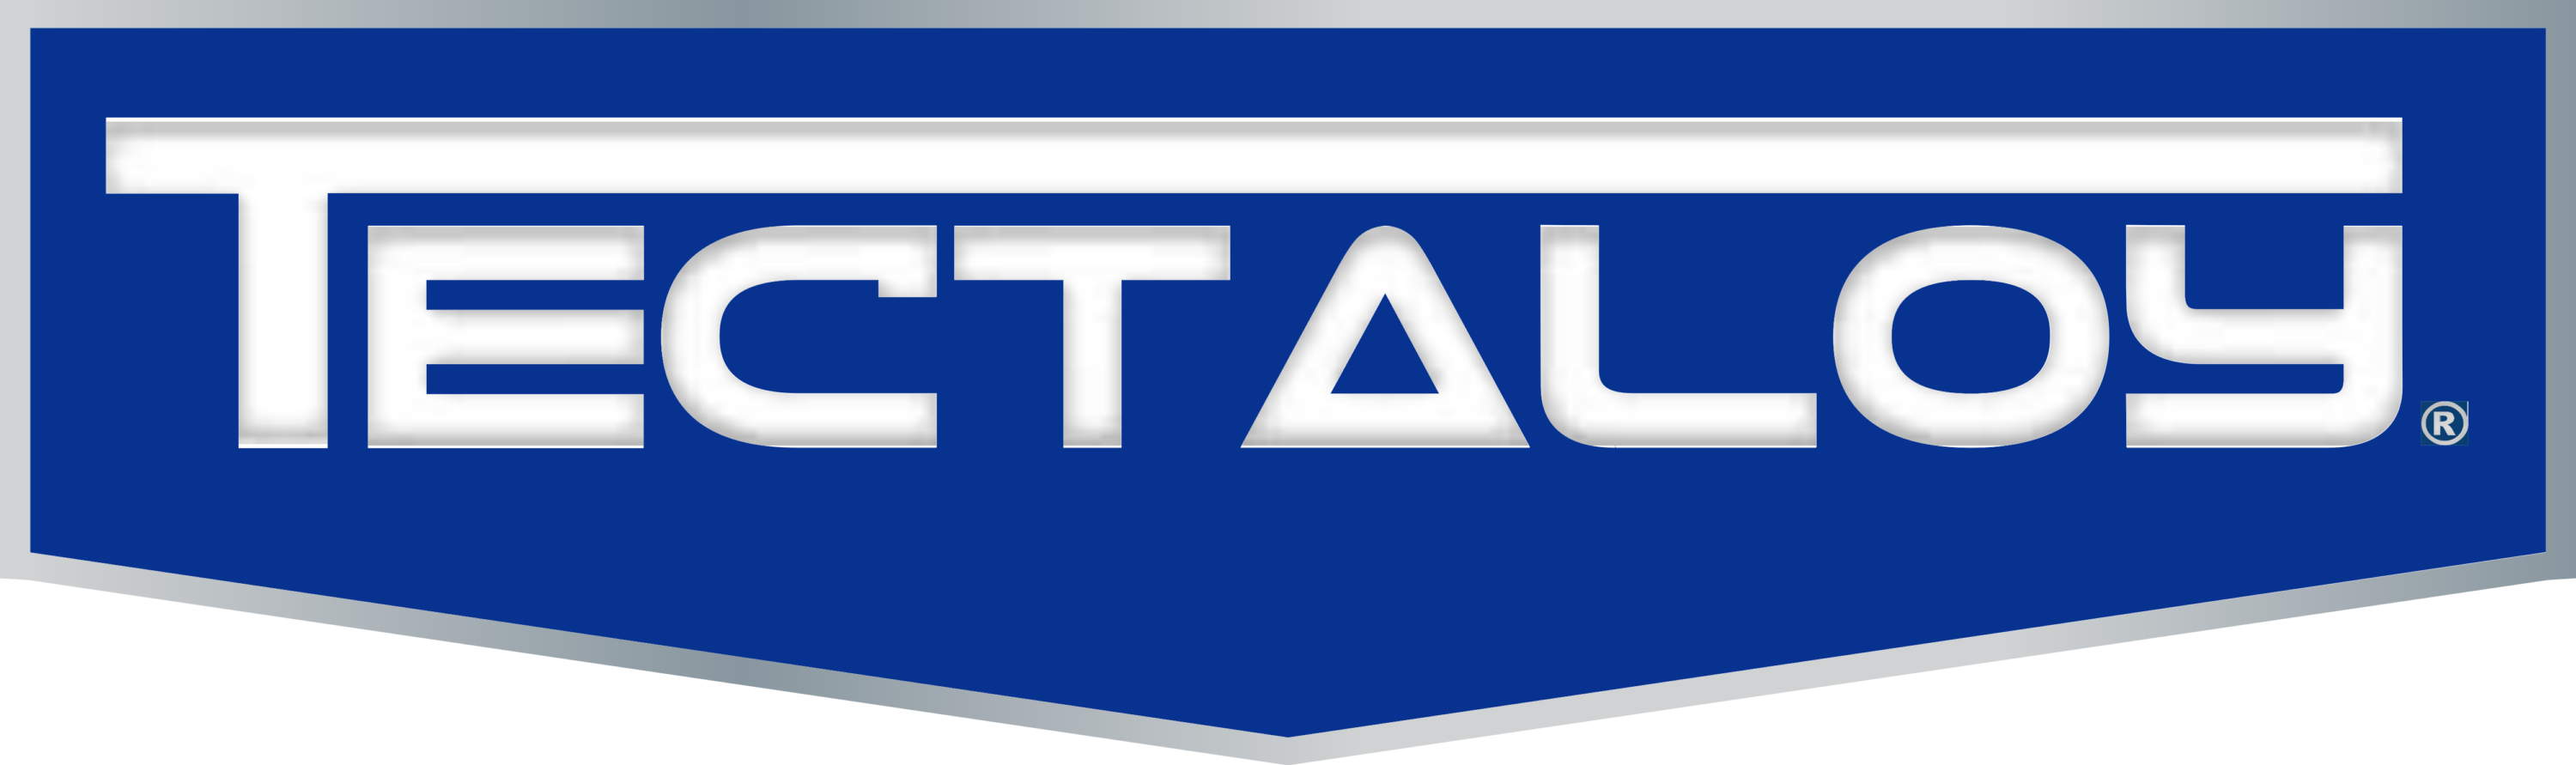 Tectaloy Logo